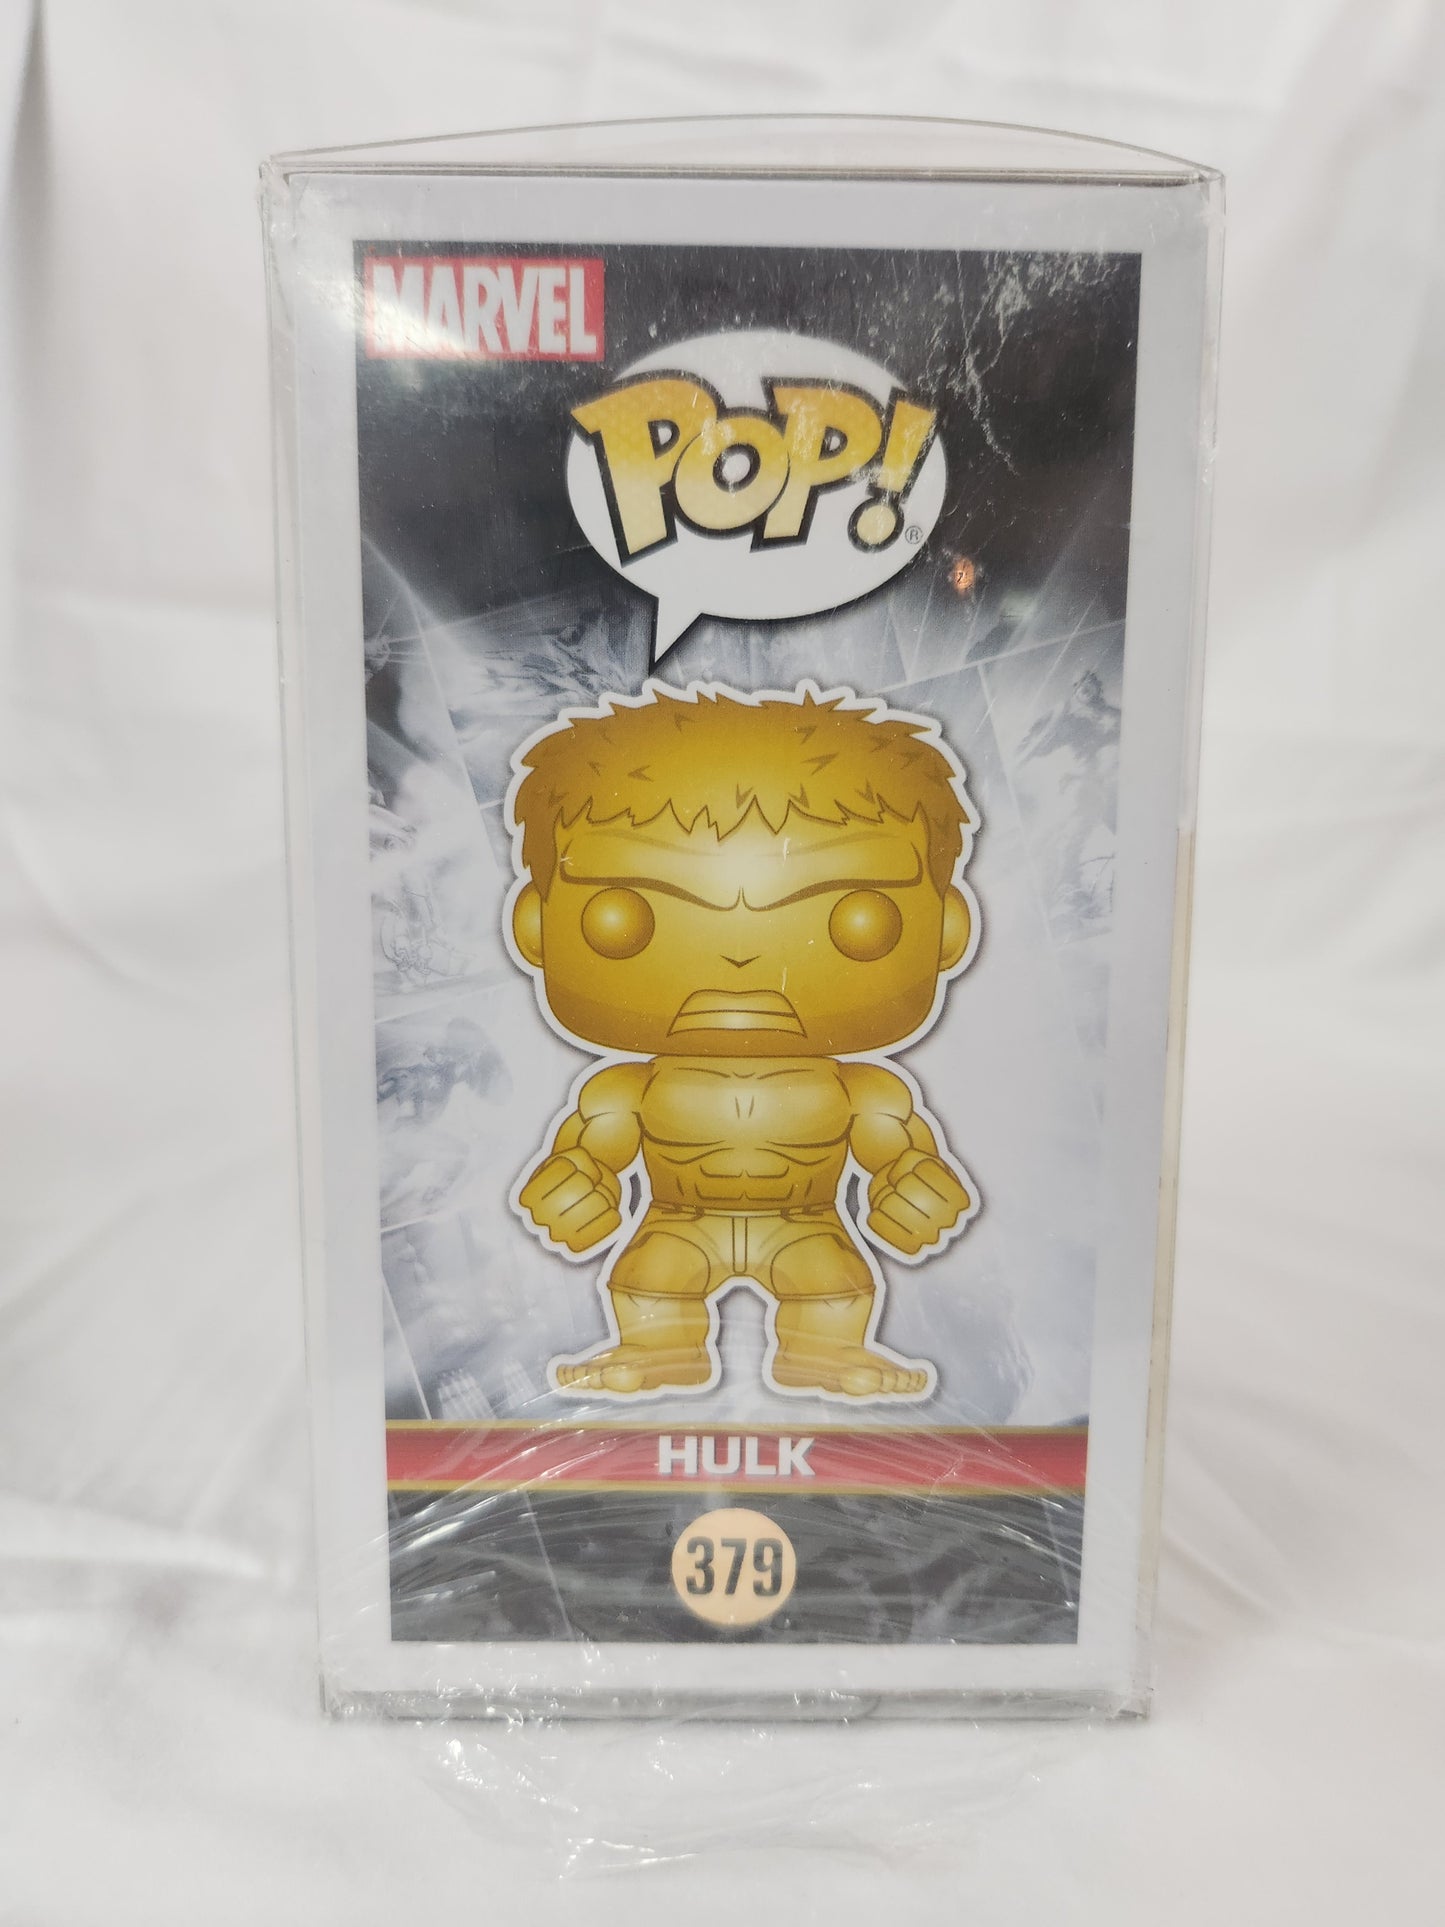 NIB - Funko Pop! Marvel Studios Avengers #379 Hulk - Bobble-Head Figurine